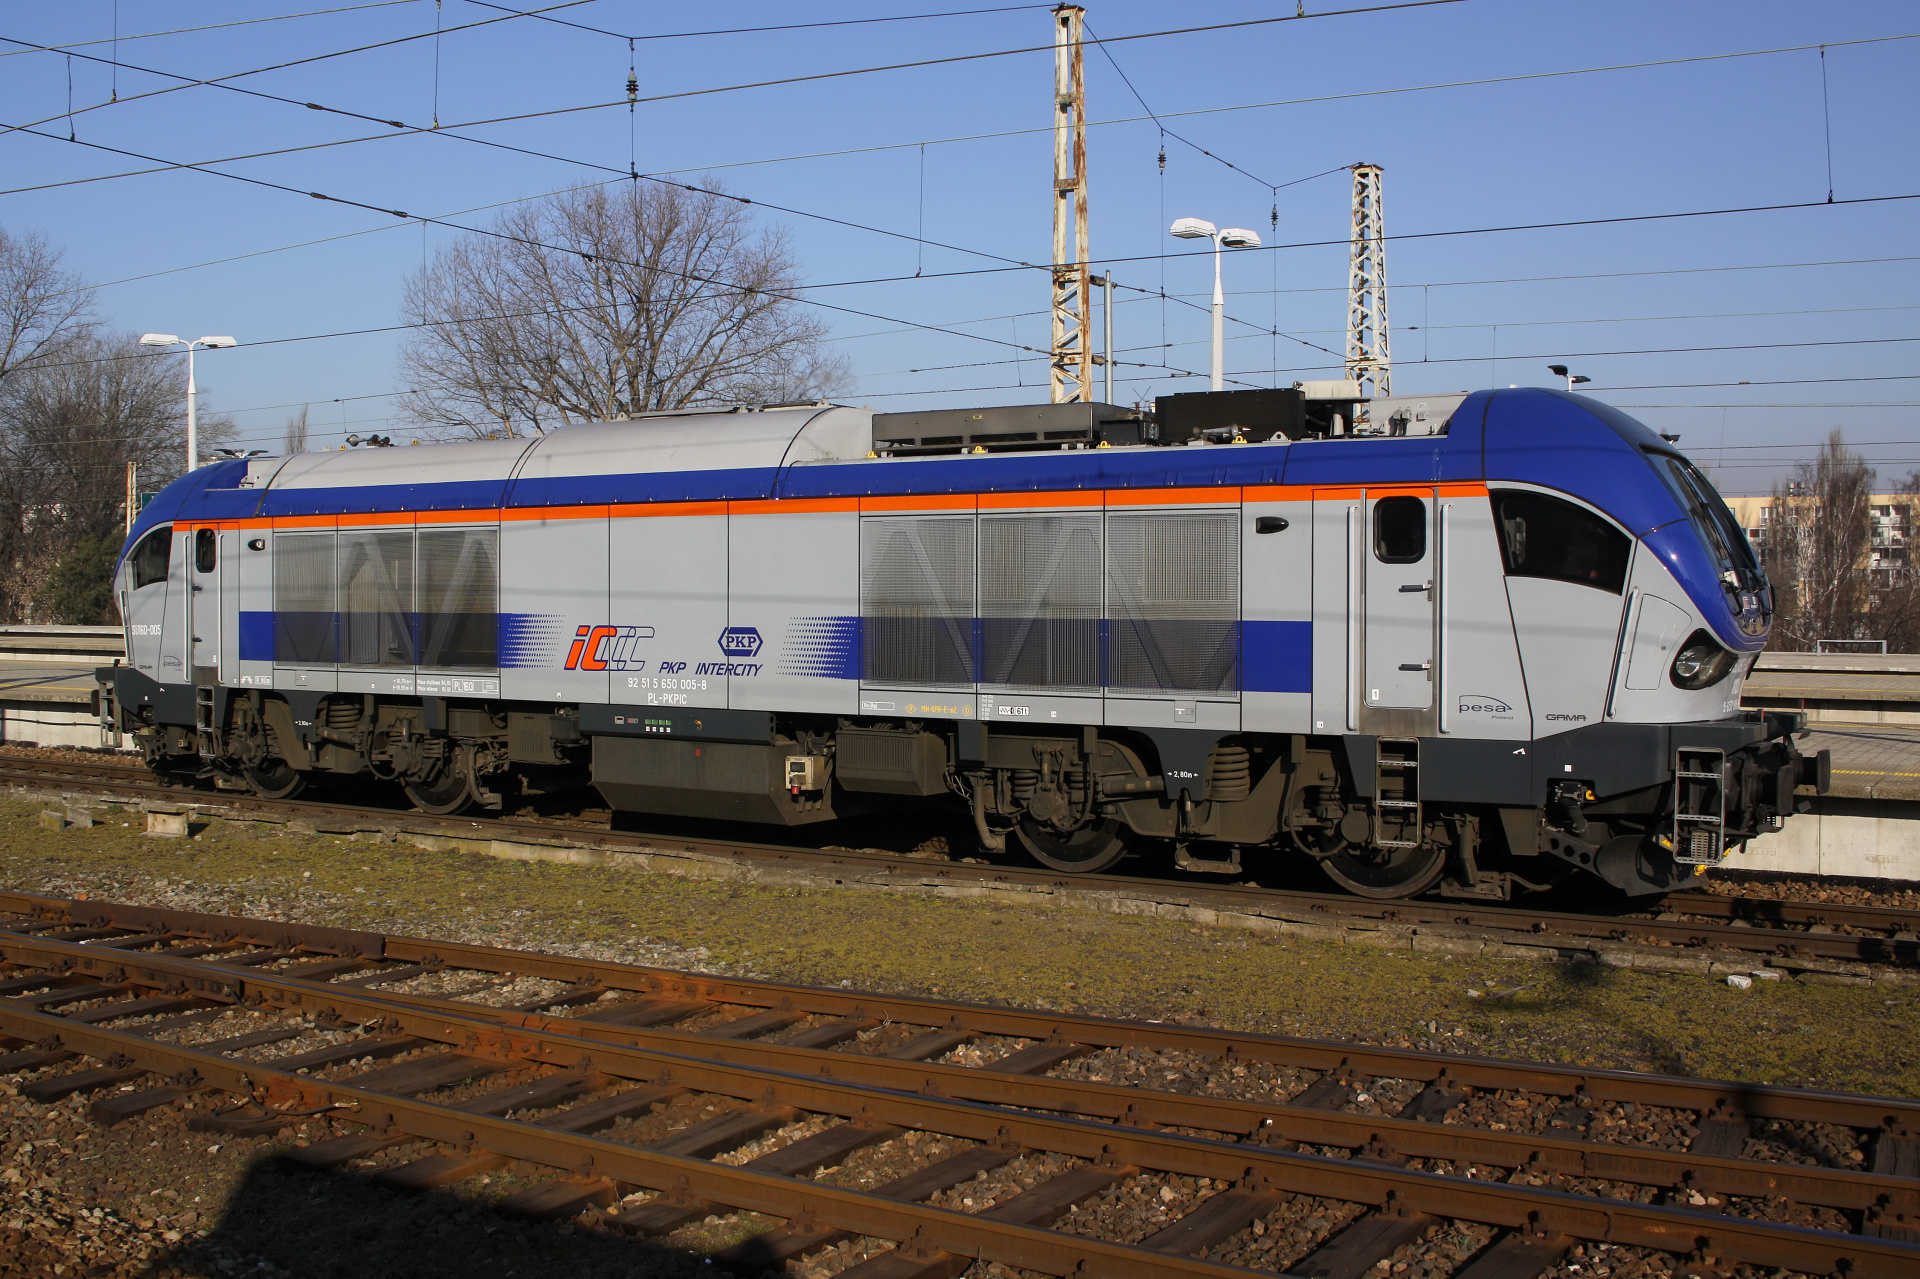 111Db SU160-005 (Vehicles » Trains and Locomotives » Pesa Gama)